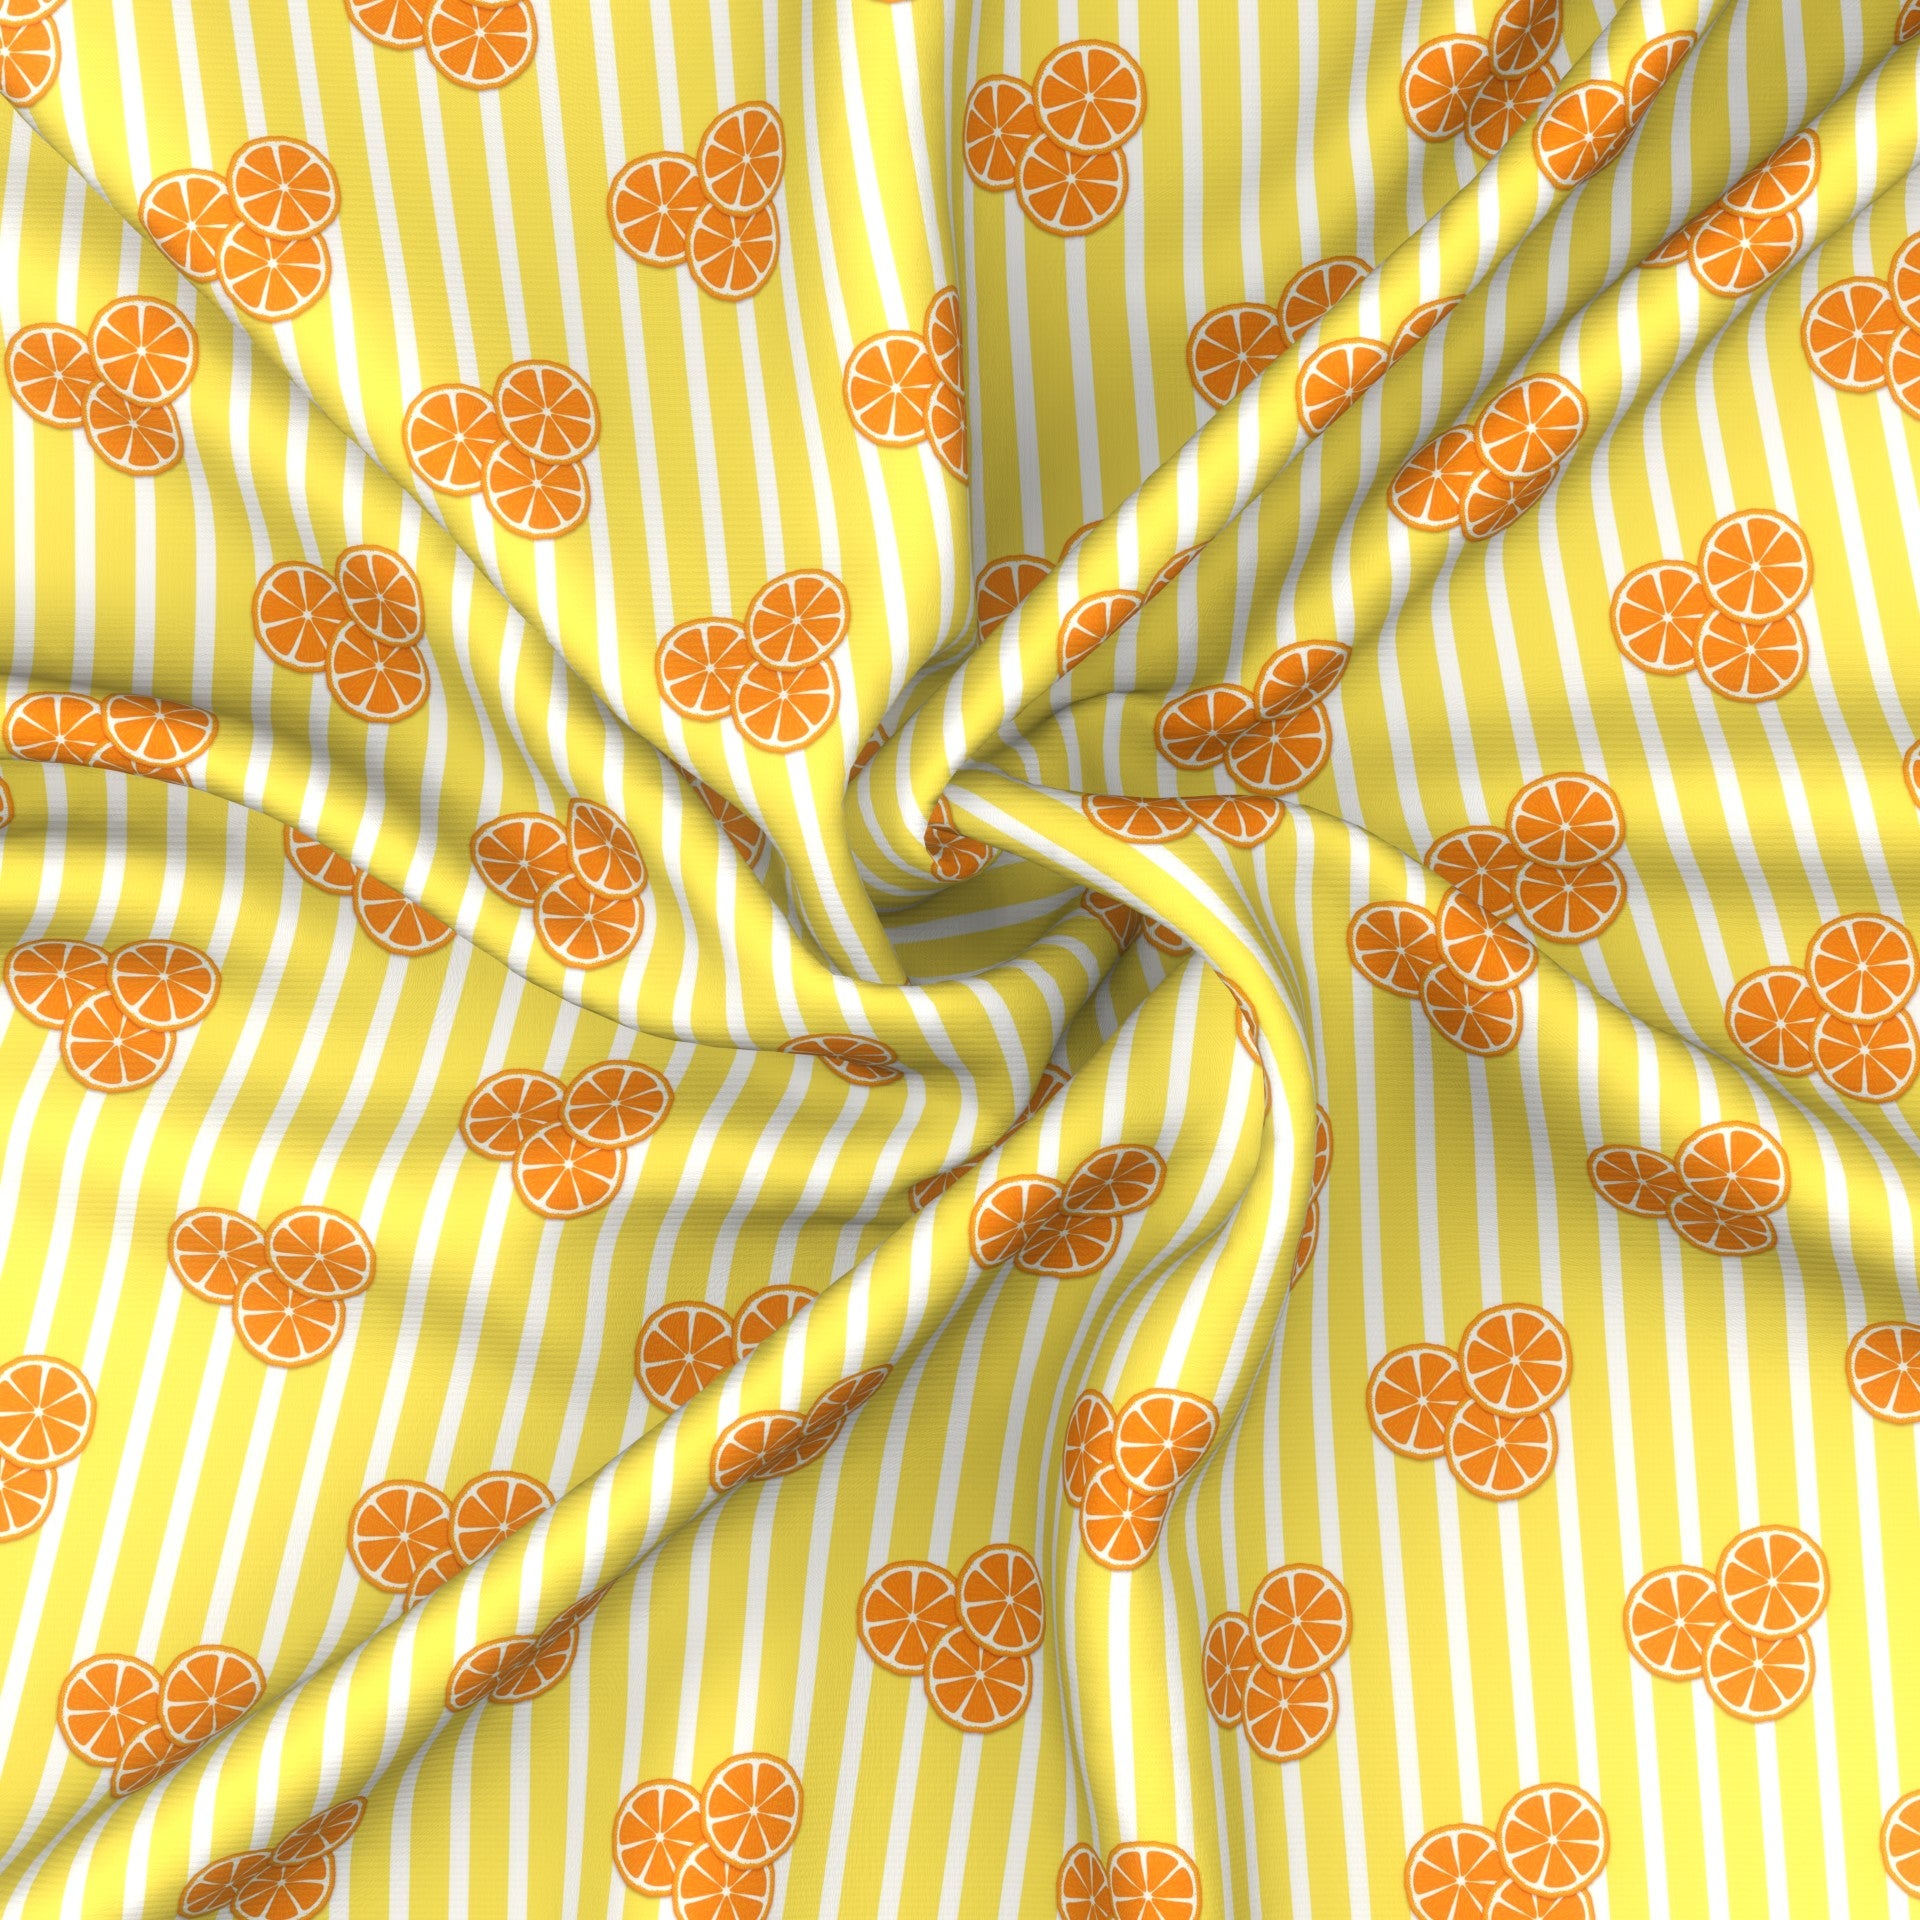 Orange Slices on Yellow and White Stripes Fabric, Raspberry Creek Fabrics